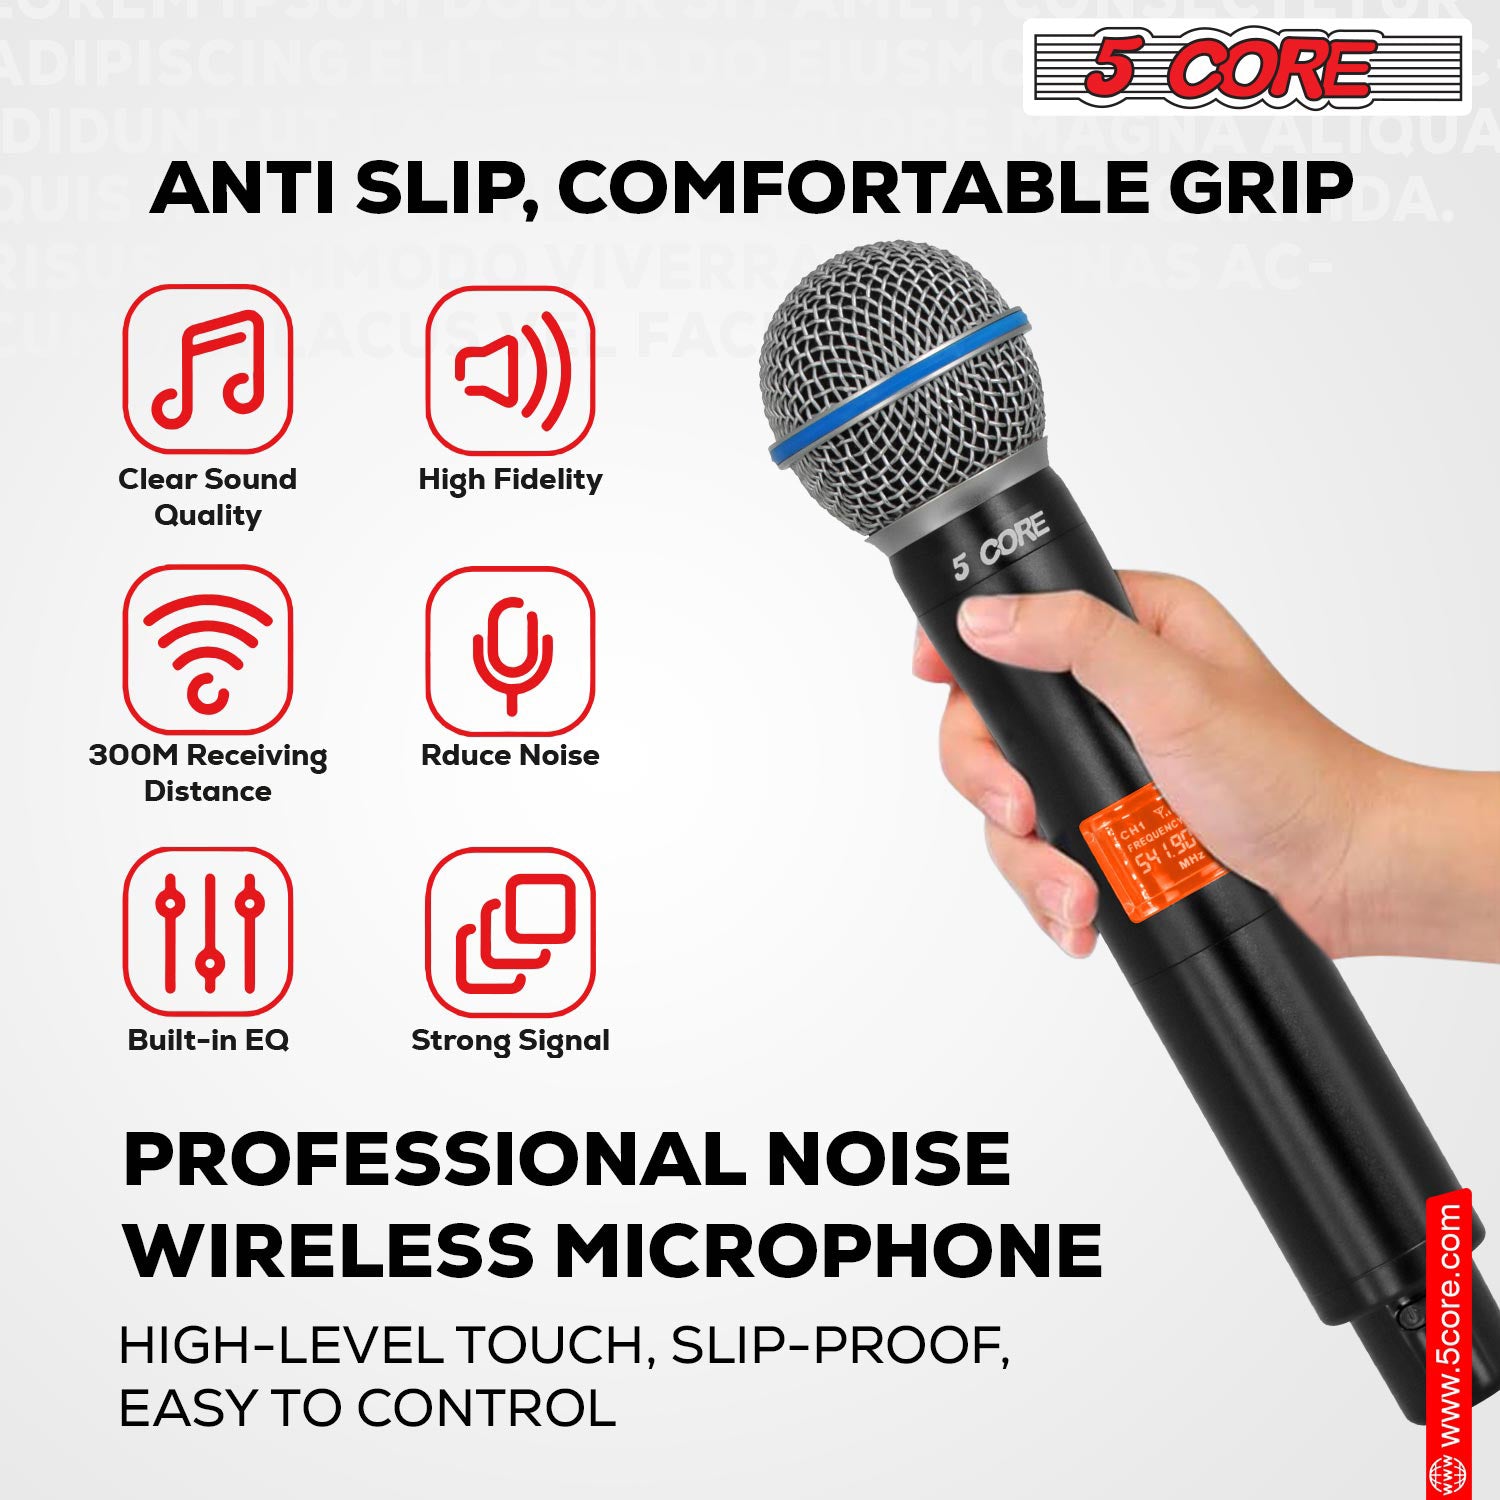 5Core Wireless Microphones Set 4 Channel UHF Microfono Inalambrico w Handheld Lapel Headset Mic